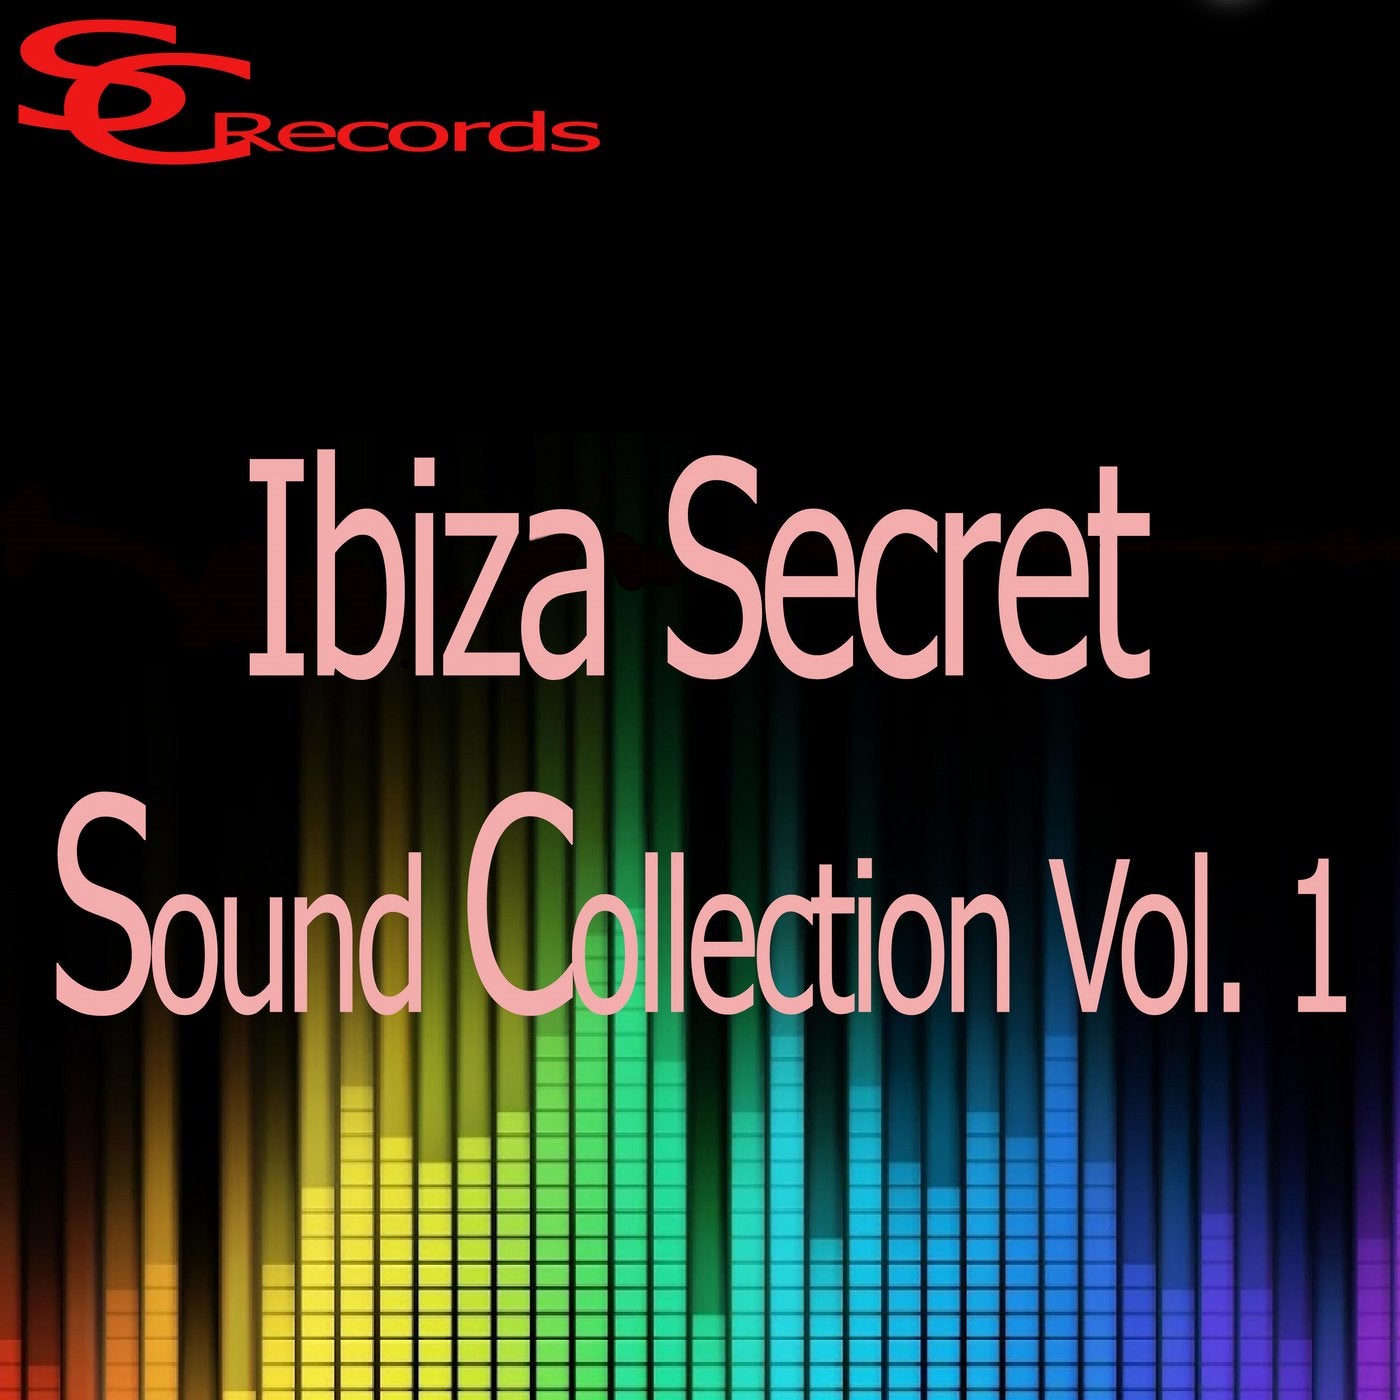 Ibiza Secret Sound Collection Vol. 1